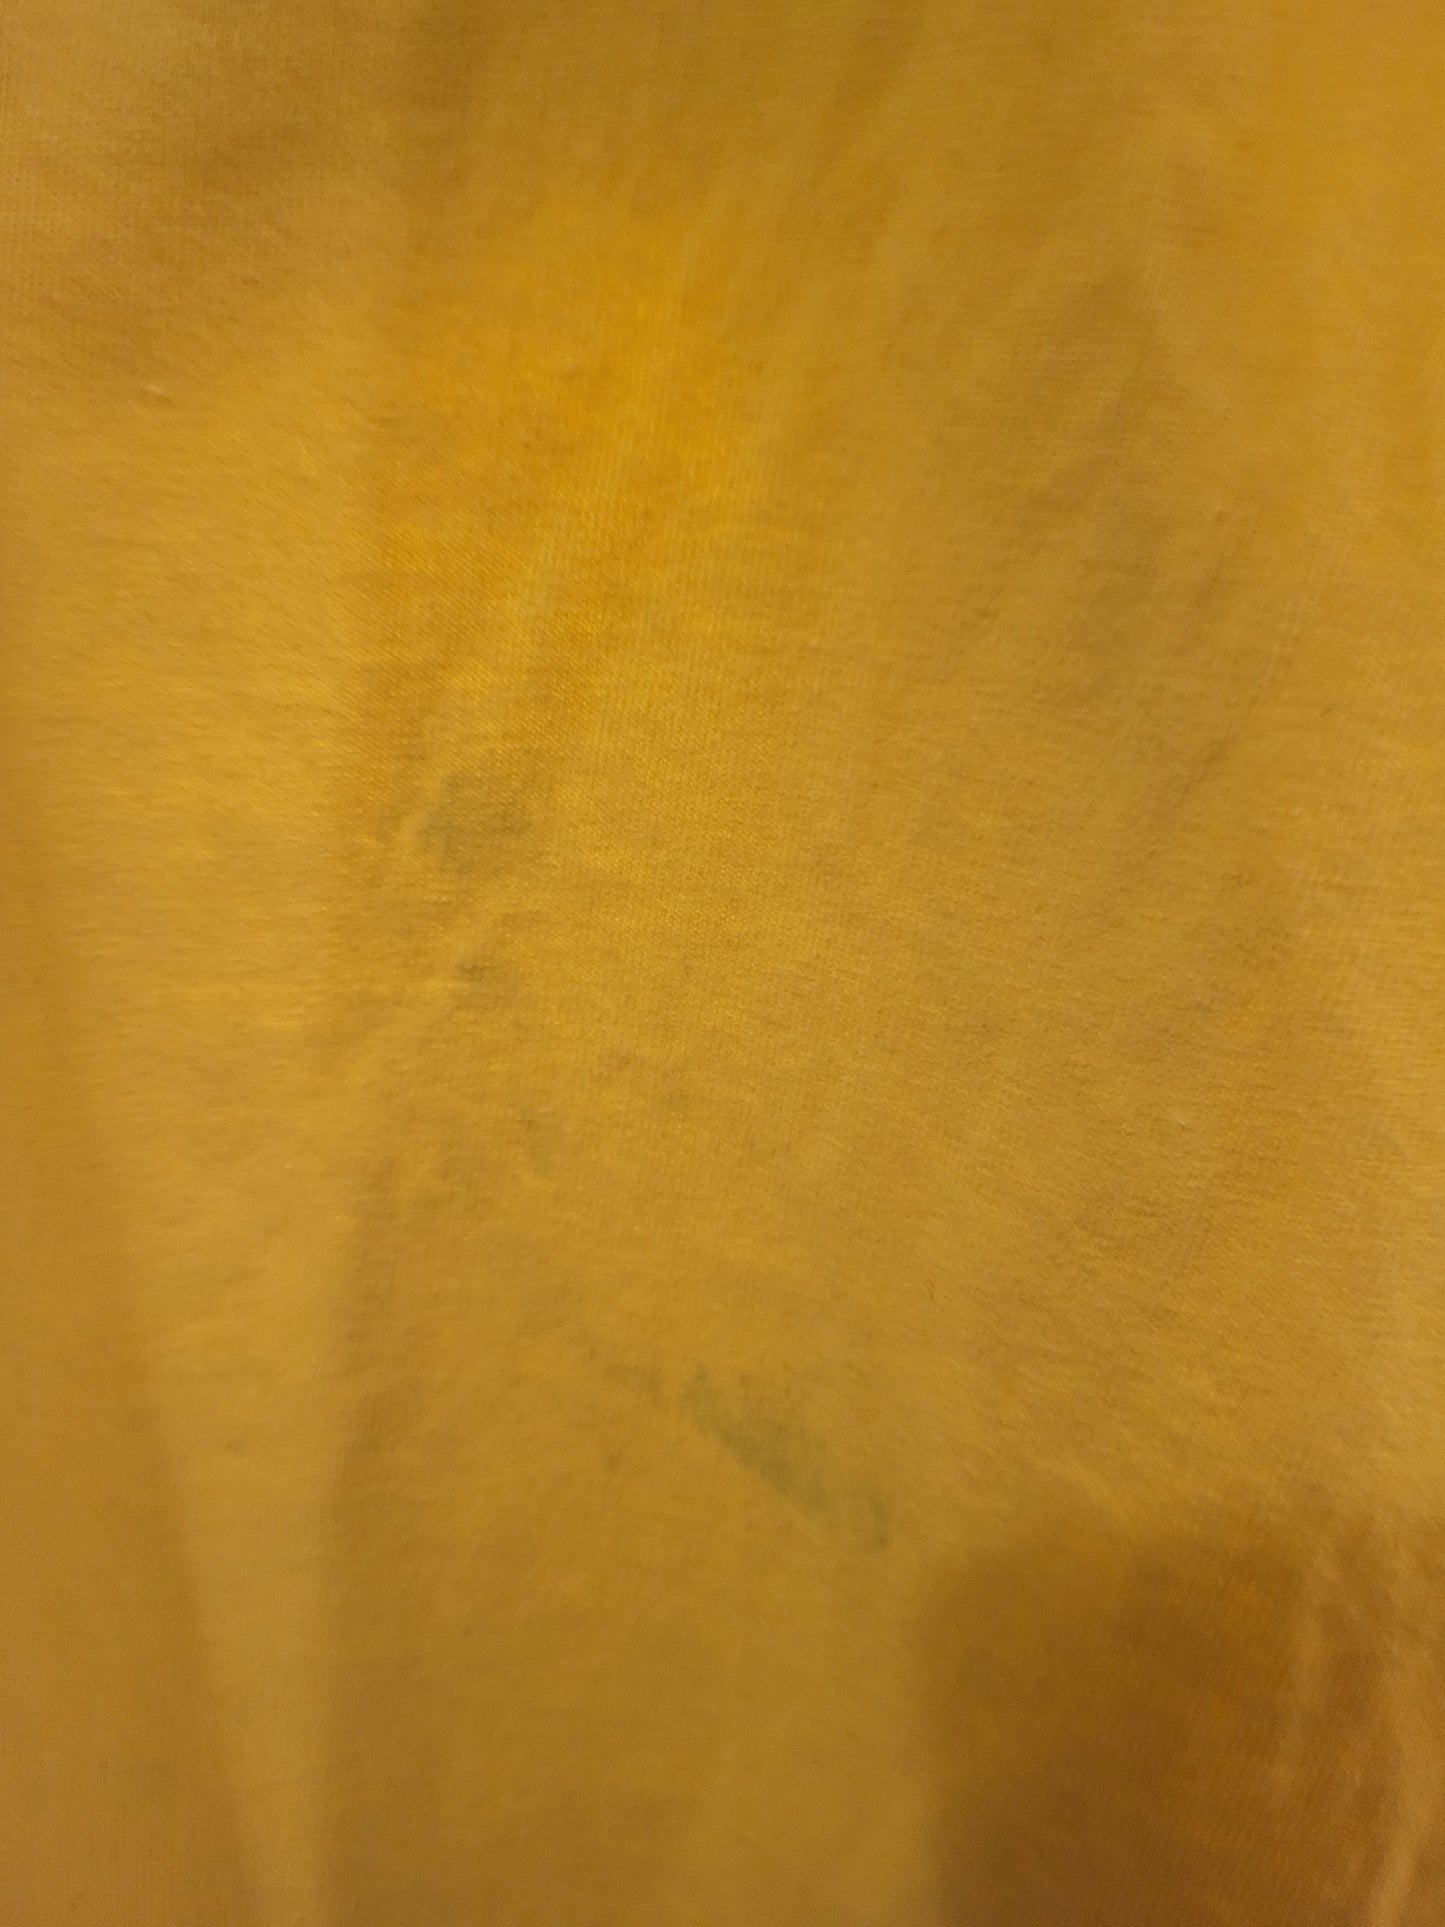 Michigan University Yellow T-Shirt